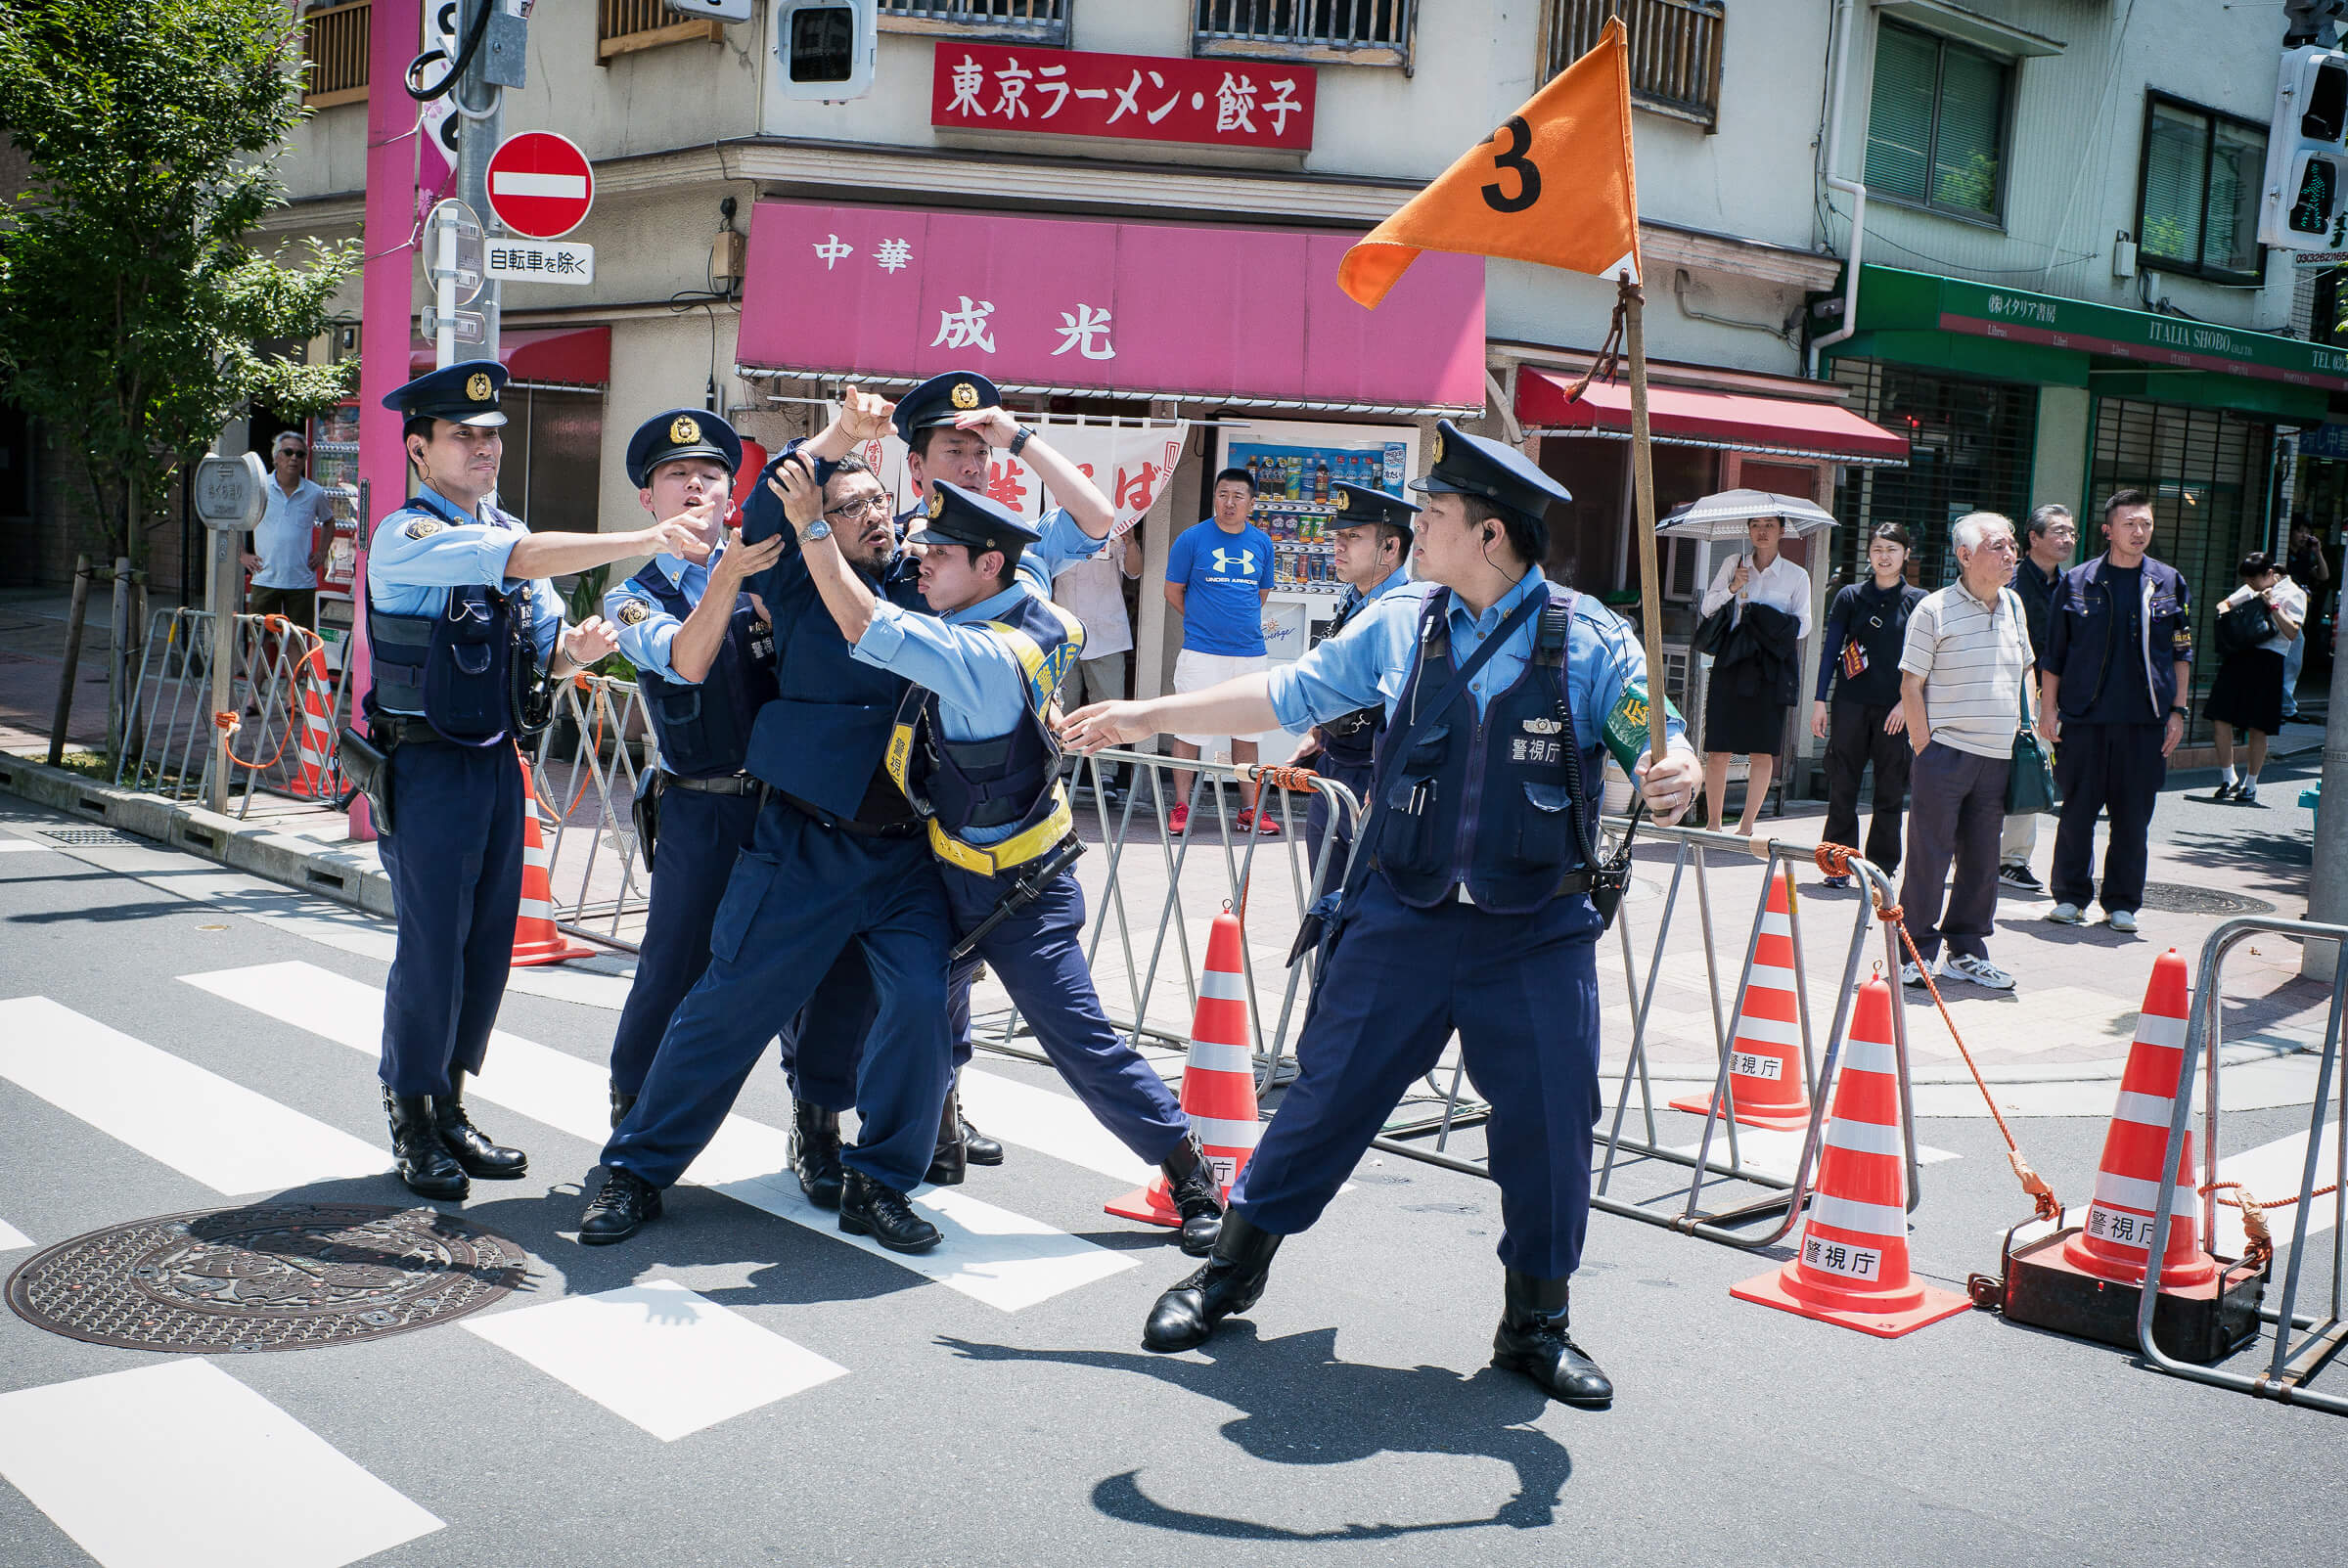 Pleasing the policeman. Полиция Токио форма. Полиция Японии. Форма полиции Японии. Полицейские в Японии.